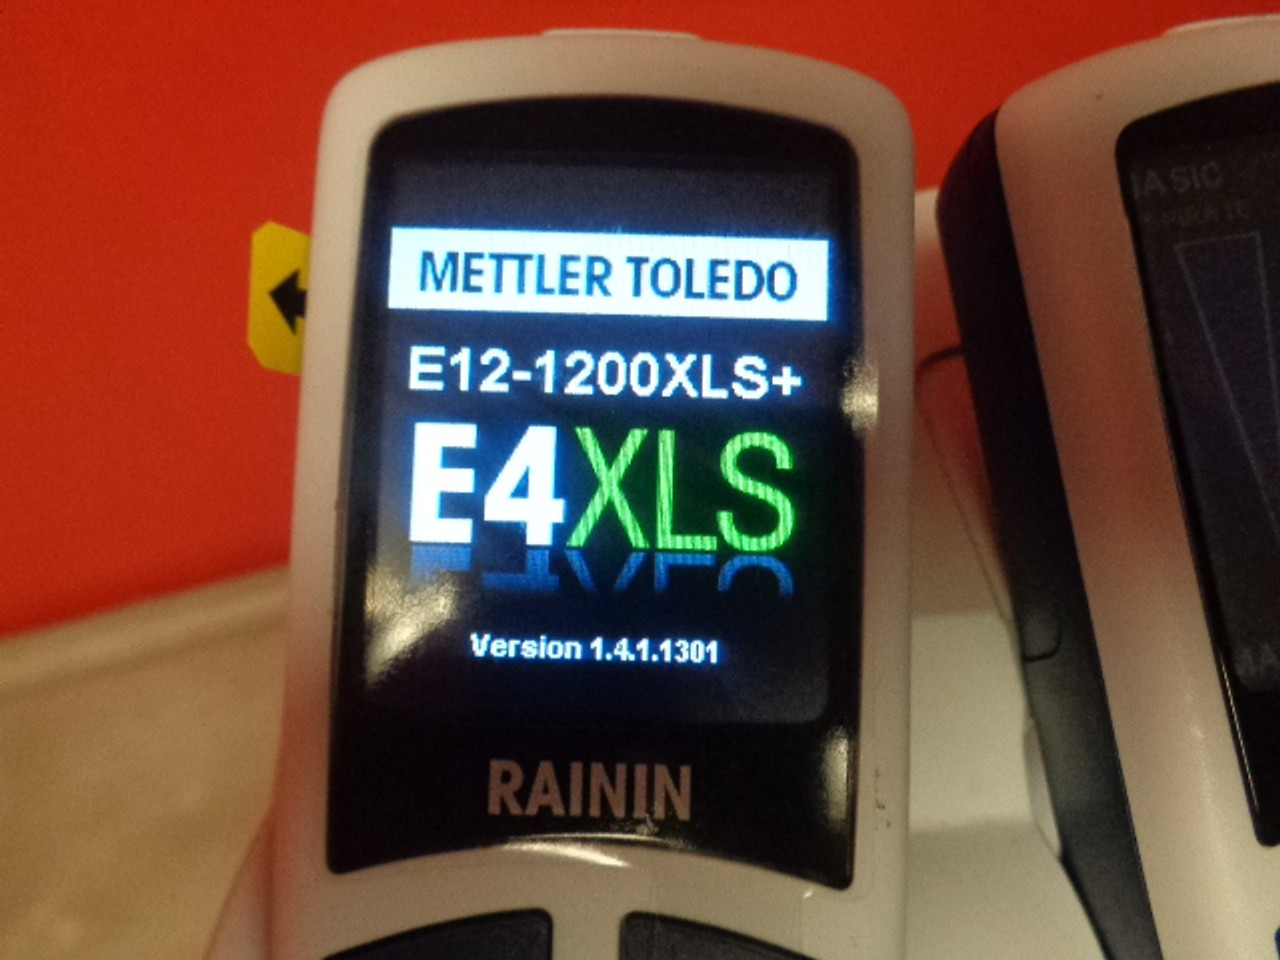 Mettler Toledo SmartStand SCS-B w/ 4 Rainin E4 XLS Digital Pipettes